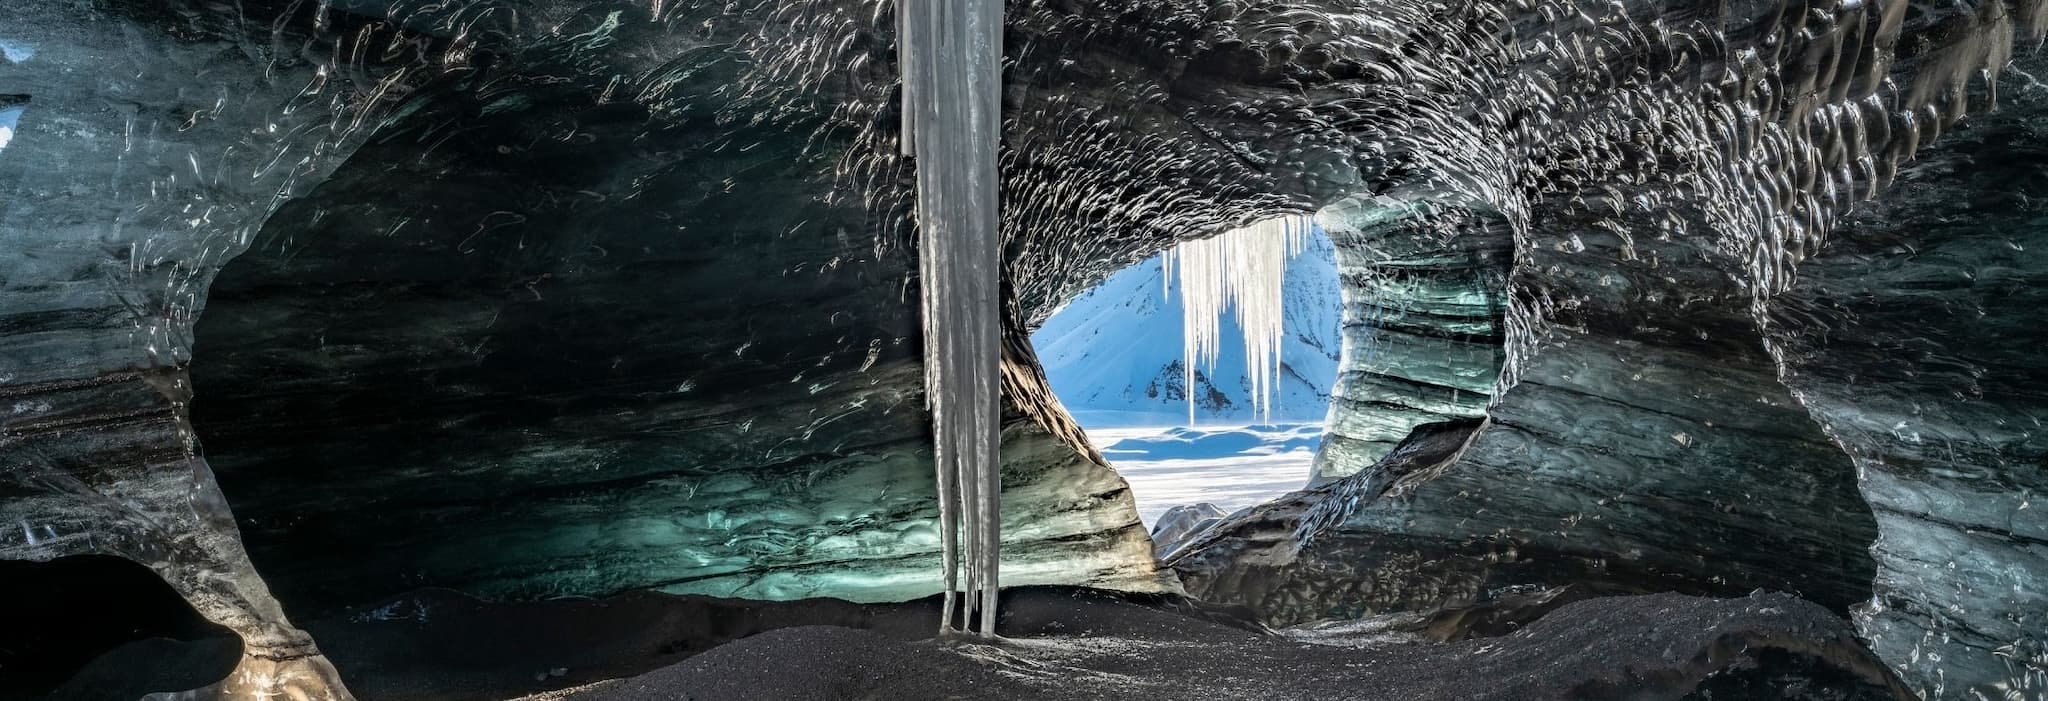 Mýrdalsjökull Glacier Ice Cave, Iceland